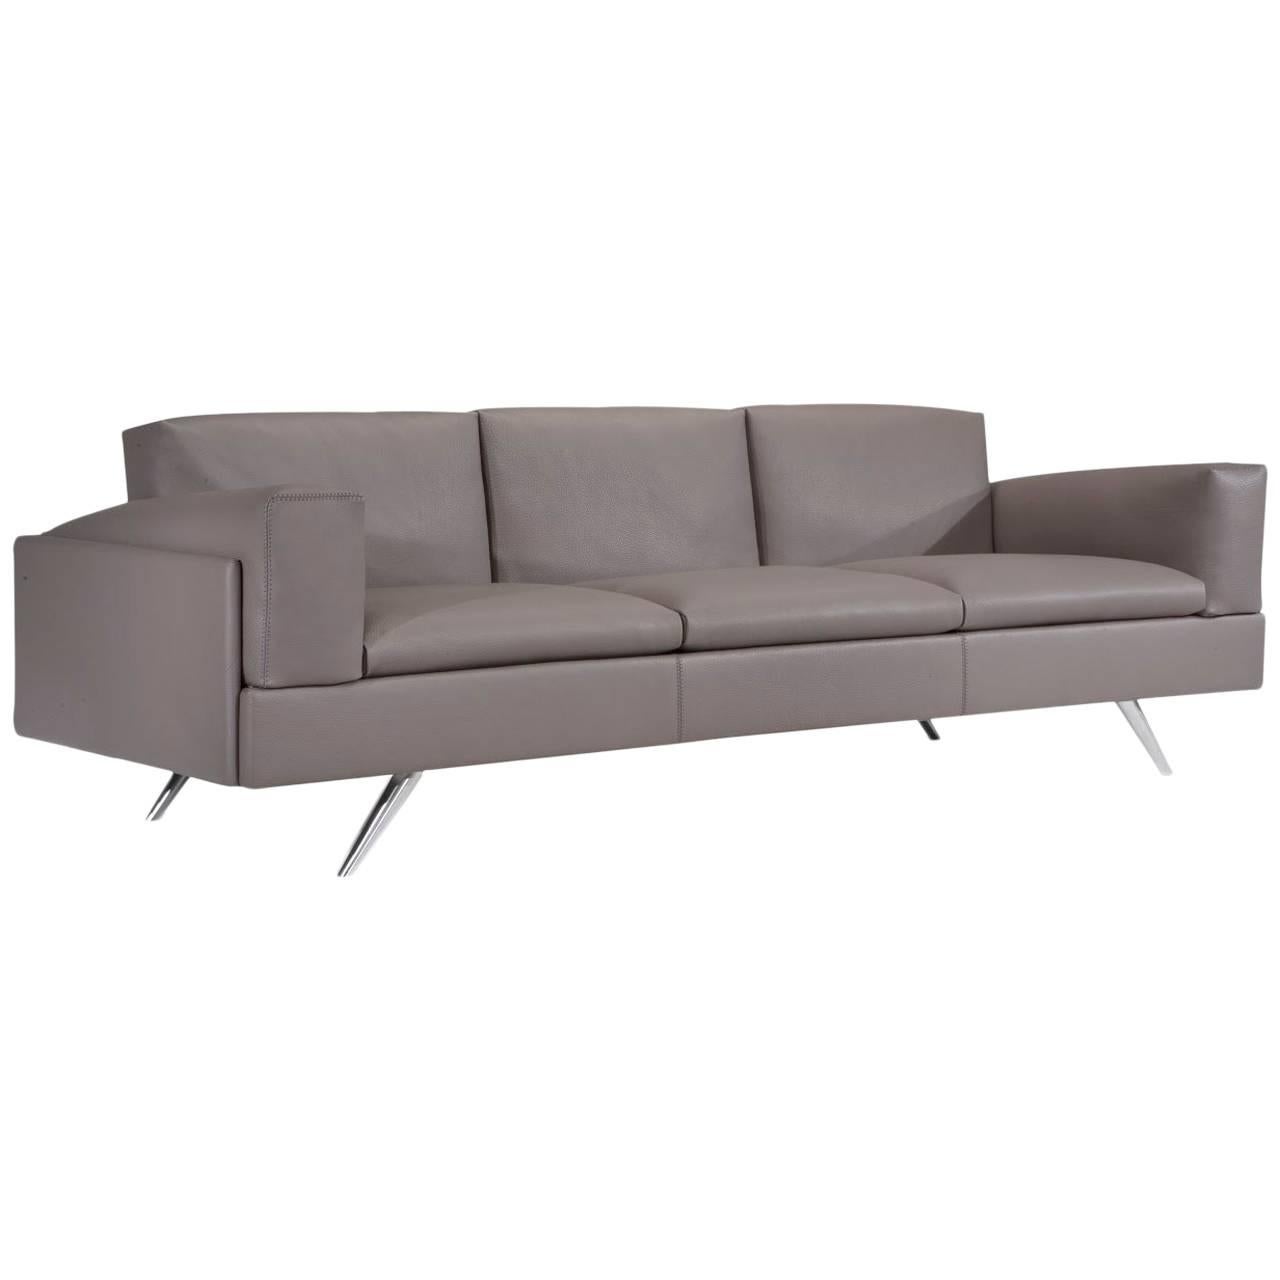 AL Sofa in Brown by Luca Scacchetti For Sale